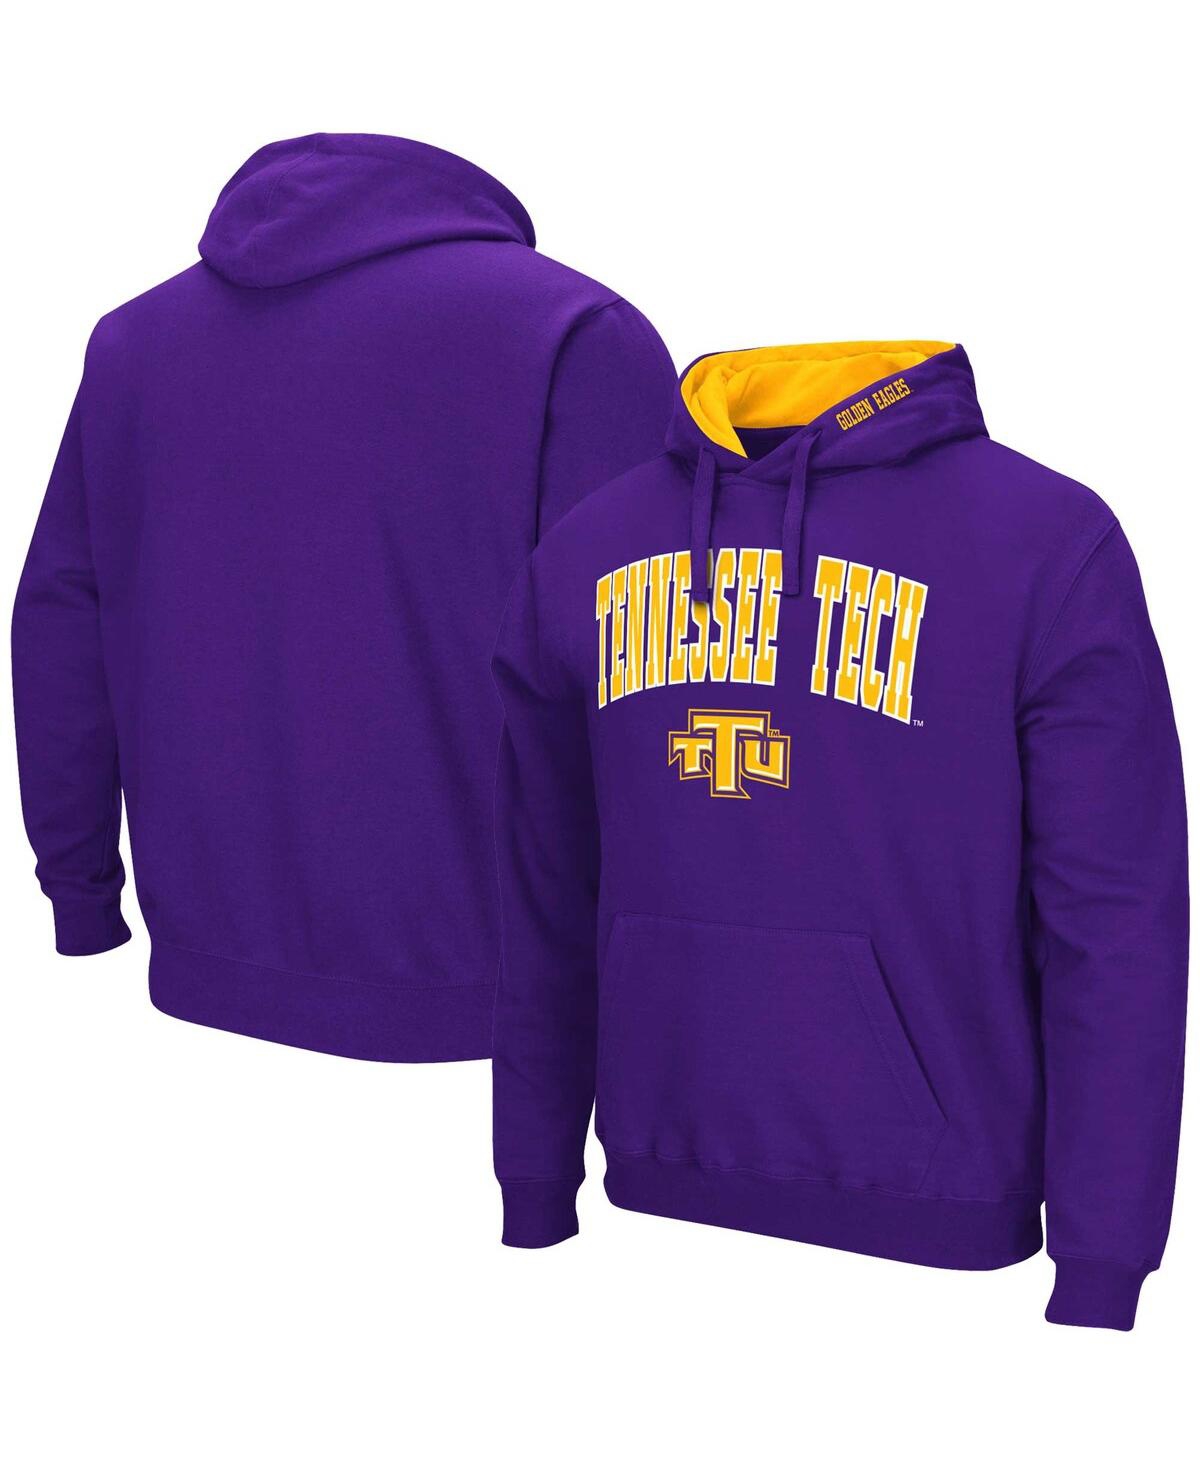 Shop Colosseum Men's  Purple Tennessee Tech Golden Eagles Arch & Logo Pullover Hoodie